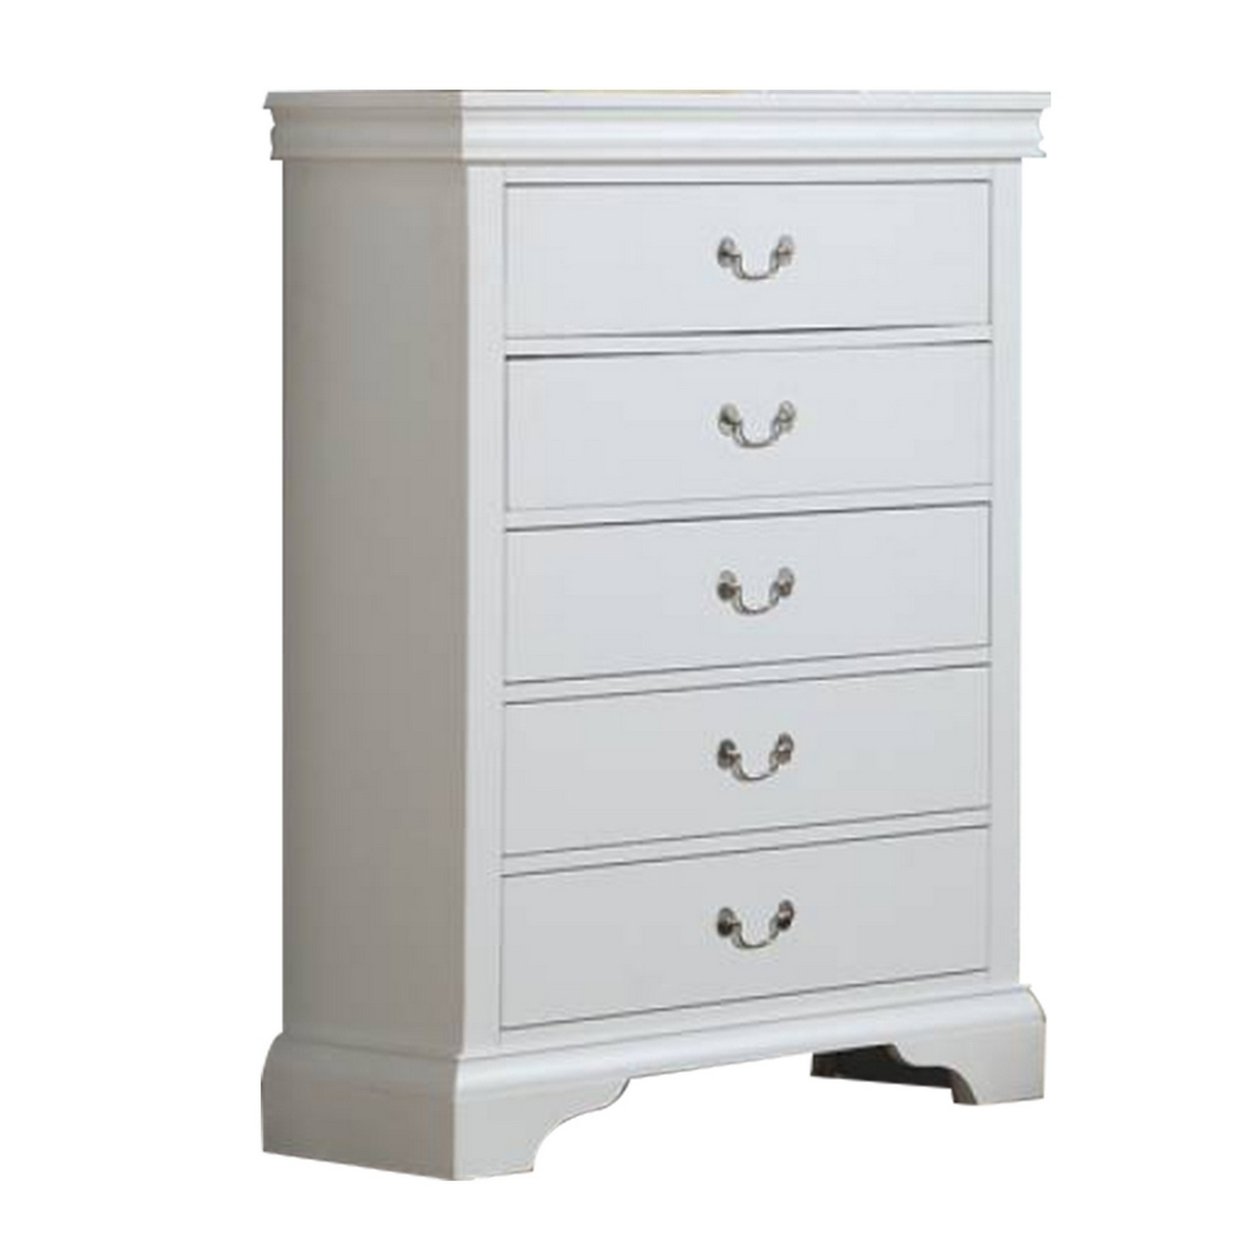 Vix 47 Inch 5 Drawer Tall Dresser Chest, Metal Handles, Crisp White Wood